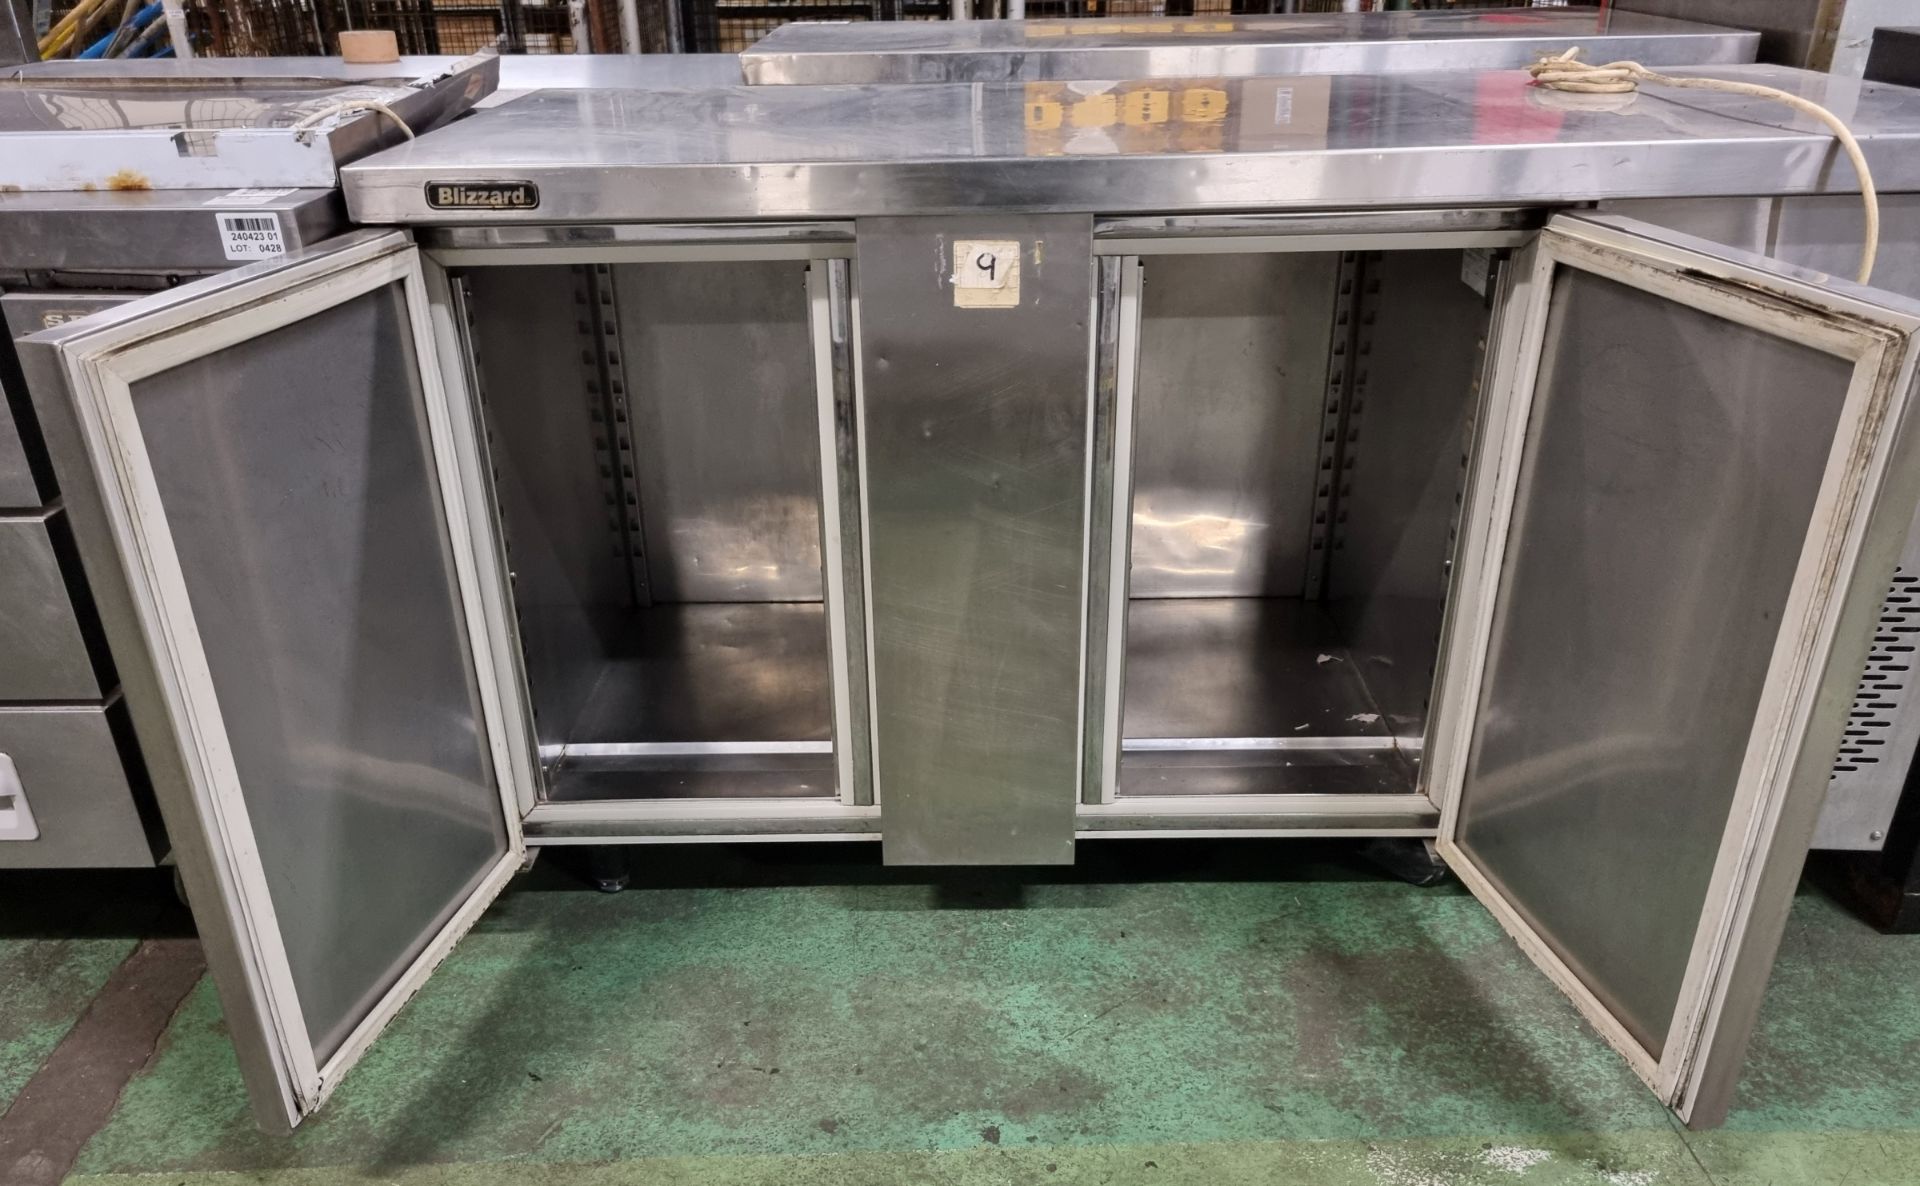 Blizzard stainless steel double door counter fridge - W 1560 x D 700 x H 860mm - Image 3 of 6